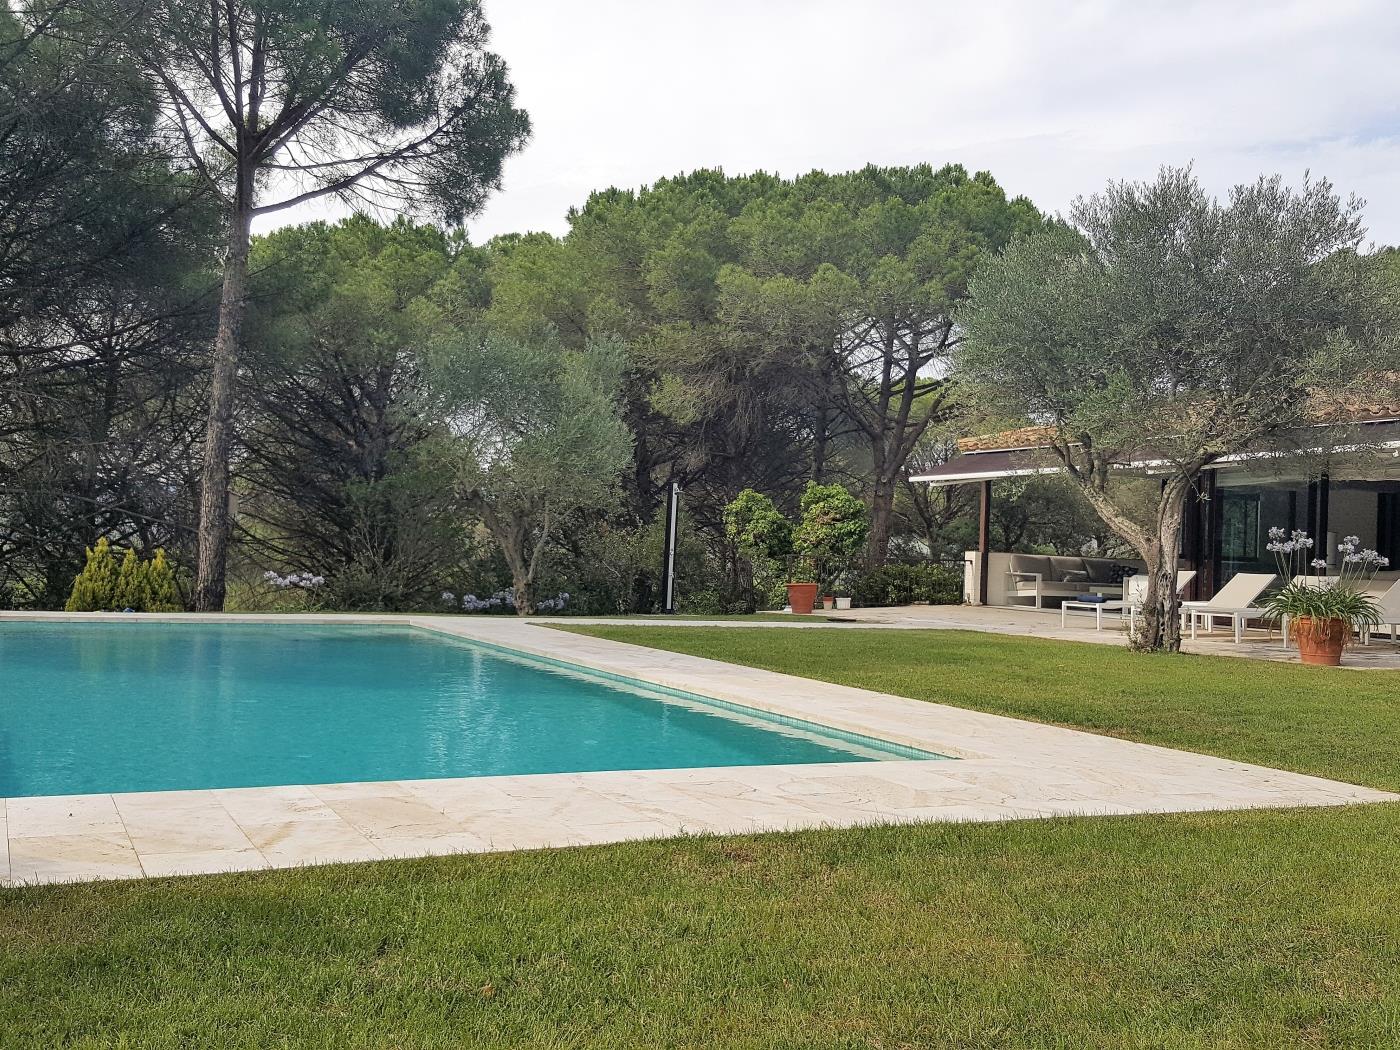 Casa Maravilla en el Golf Costa Brava con piscina privada infinita. en Santa Cristina d'Aro